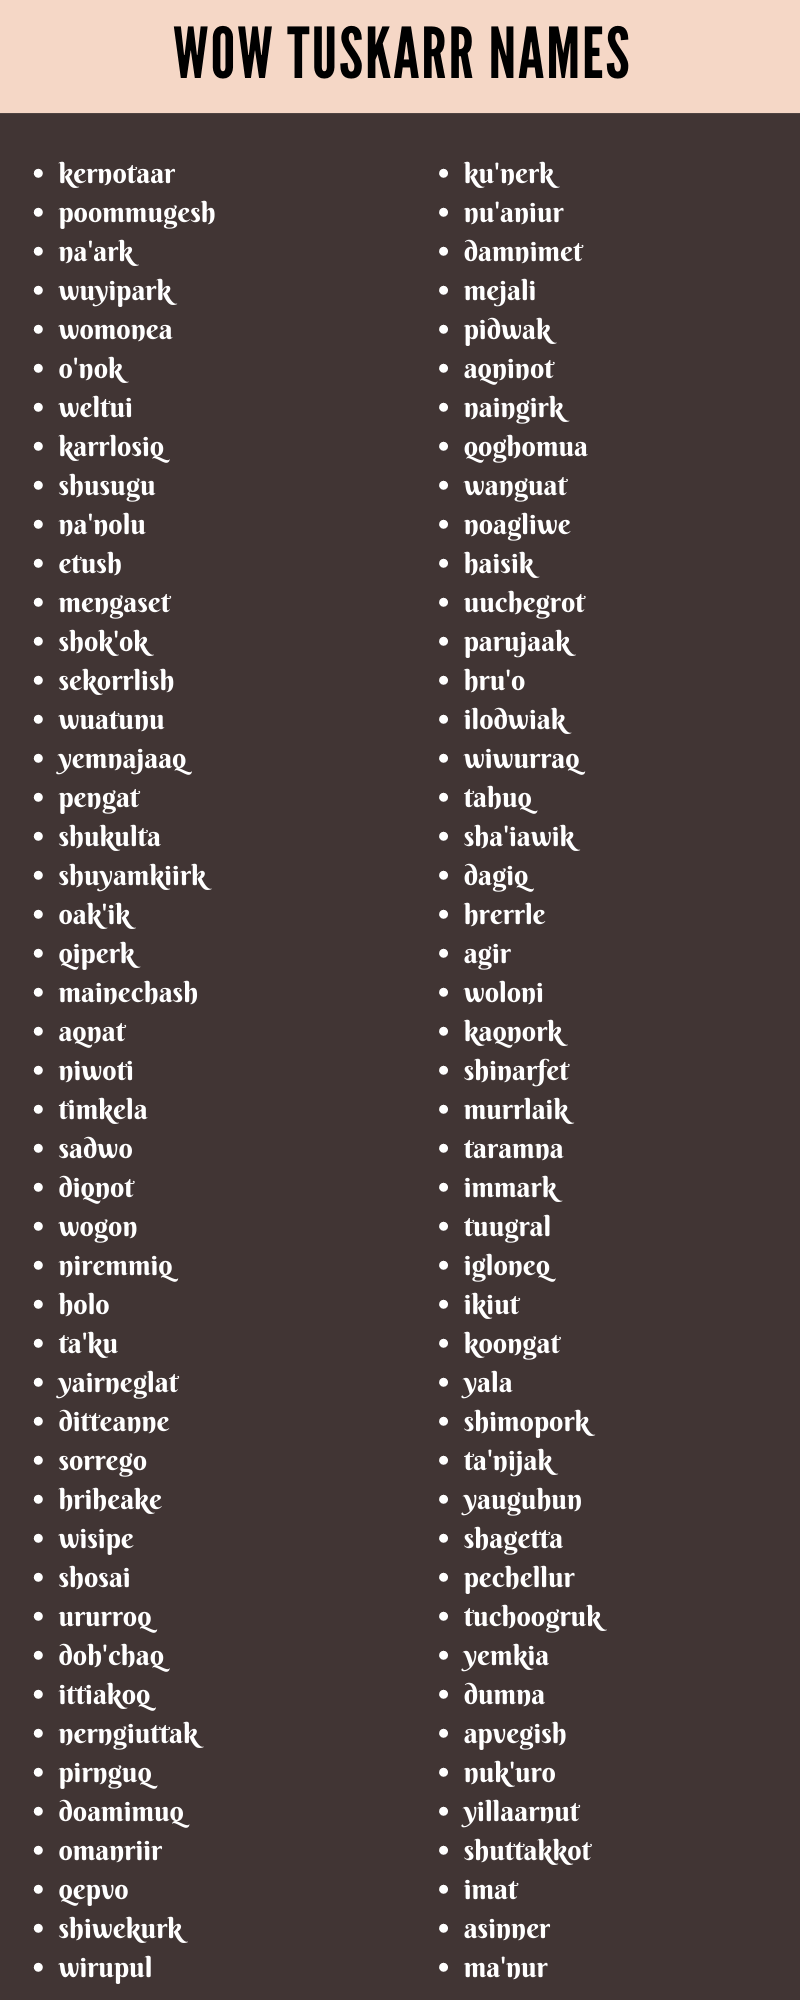 Wow Tuskarr Names